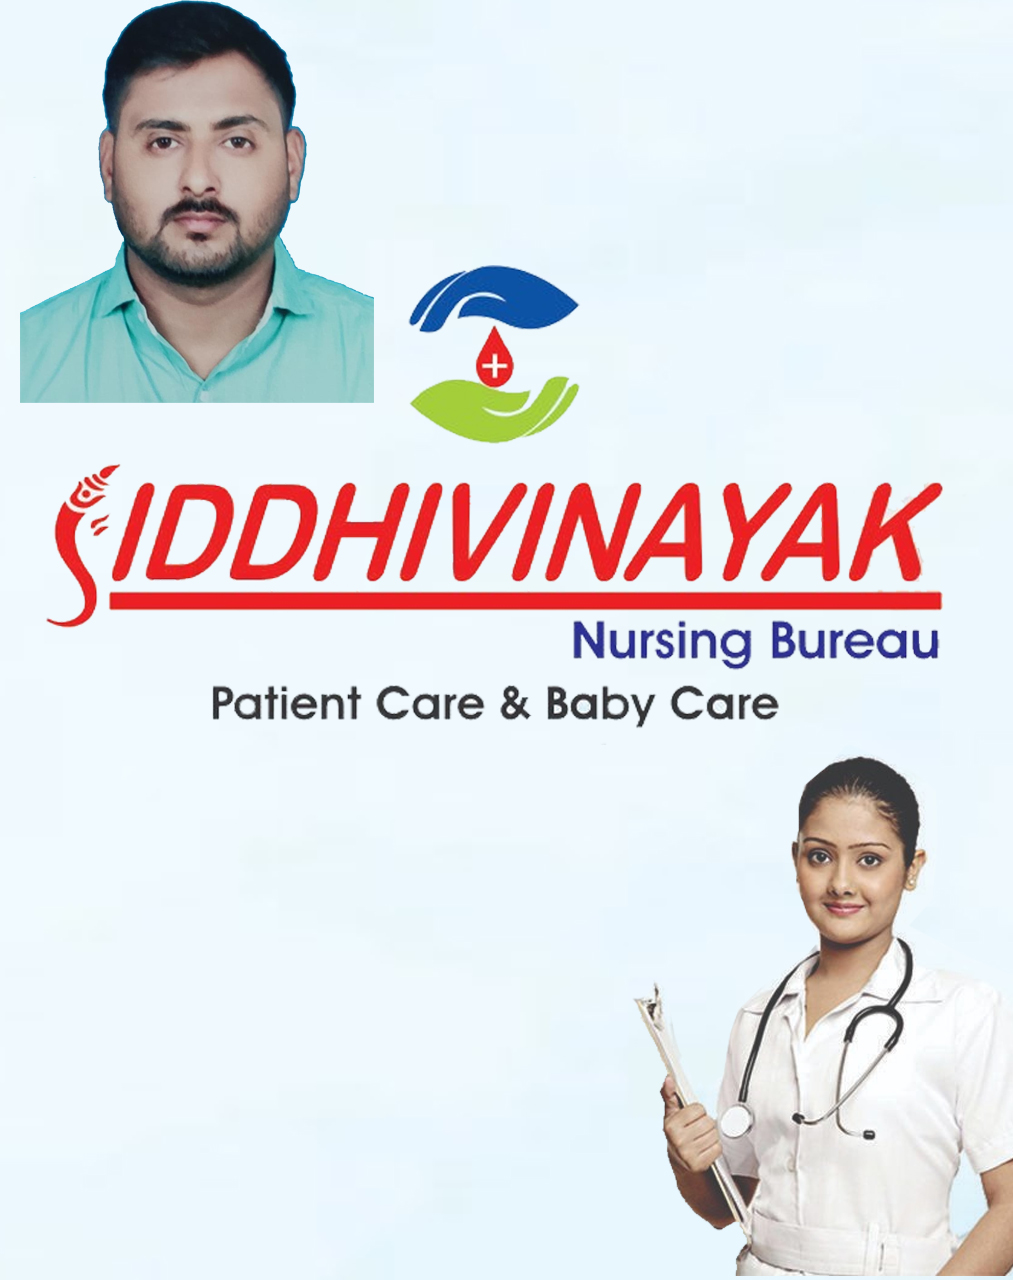 SIDDHIVINAYAK<br>Nursing Bureau <br> Patient Care & Baby Care| SolapurMall.com